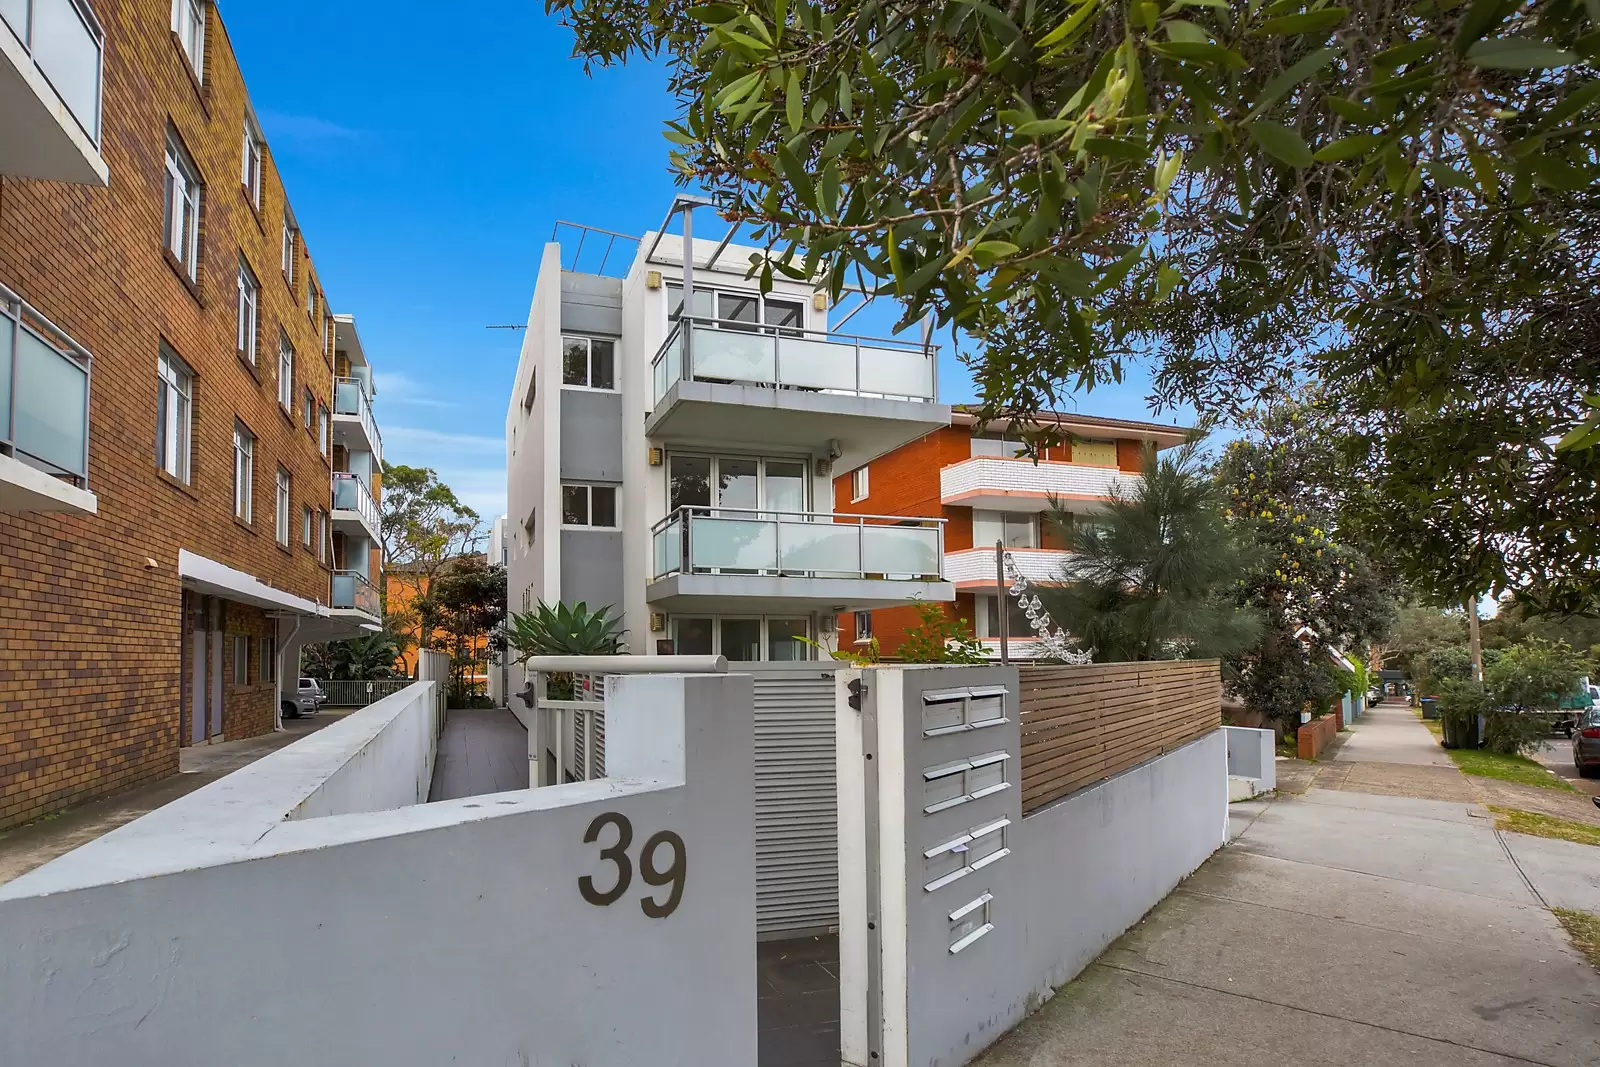 2/39 O'Brien Street, Bondi Beach Sold by Sydney Sotheby's International Realty - image 13